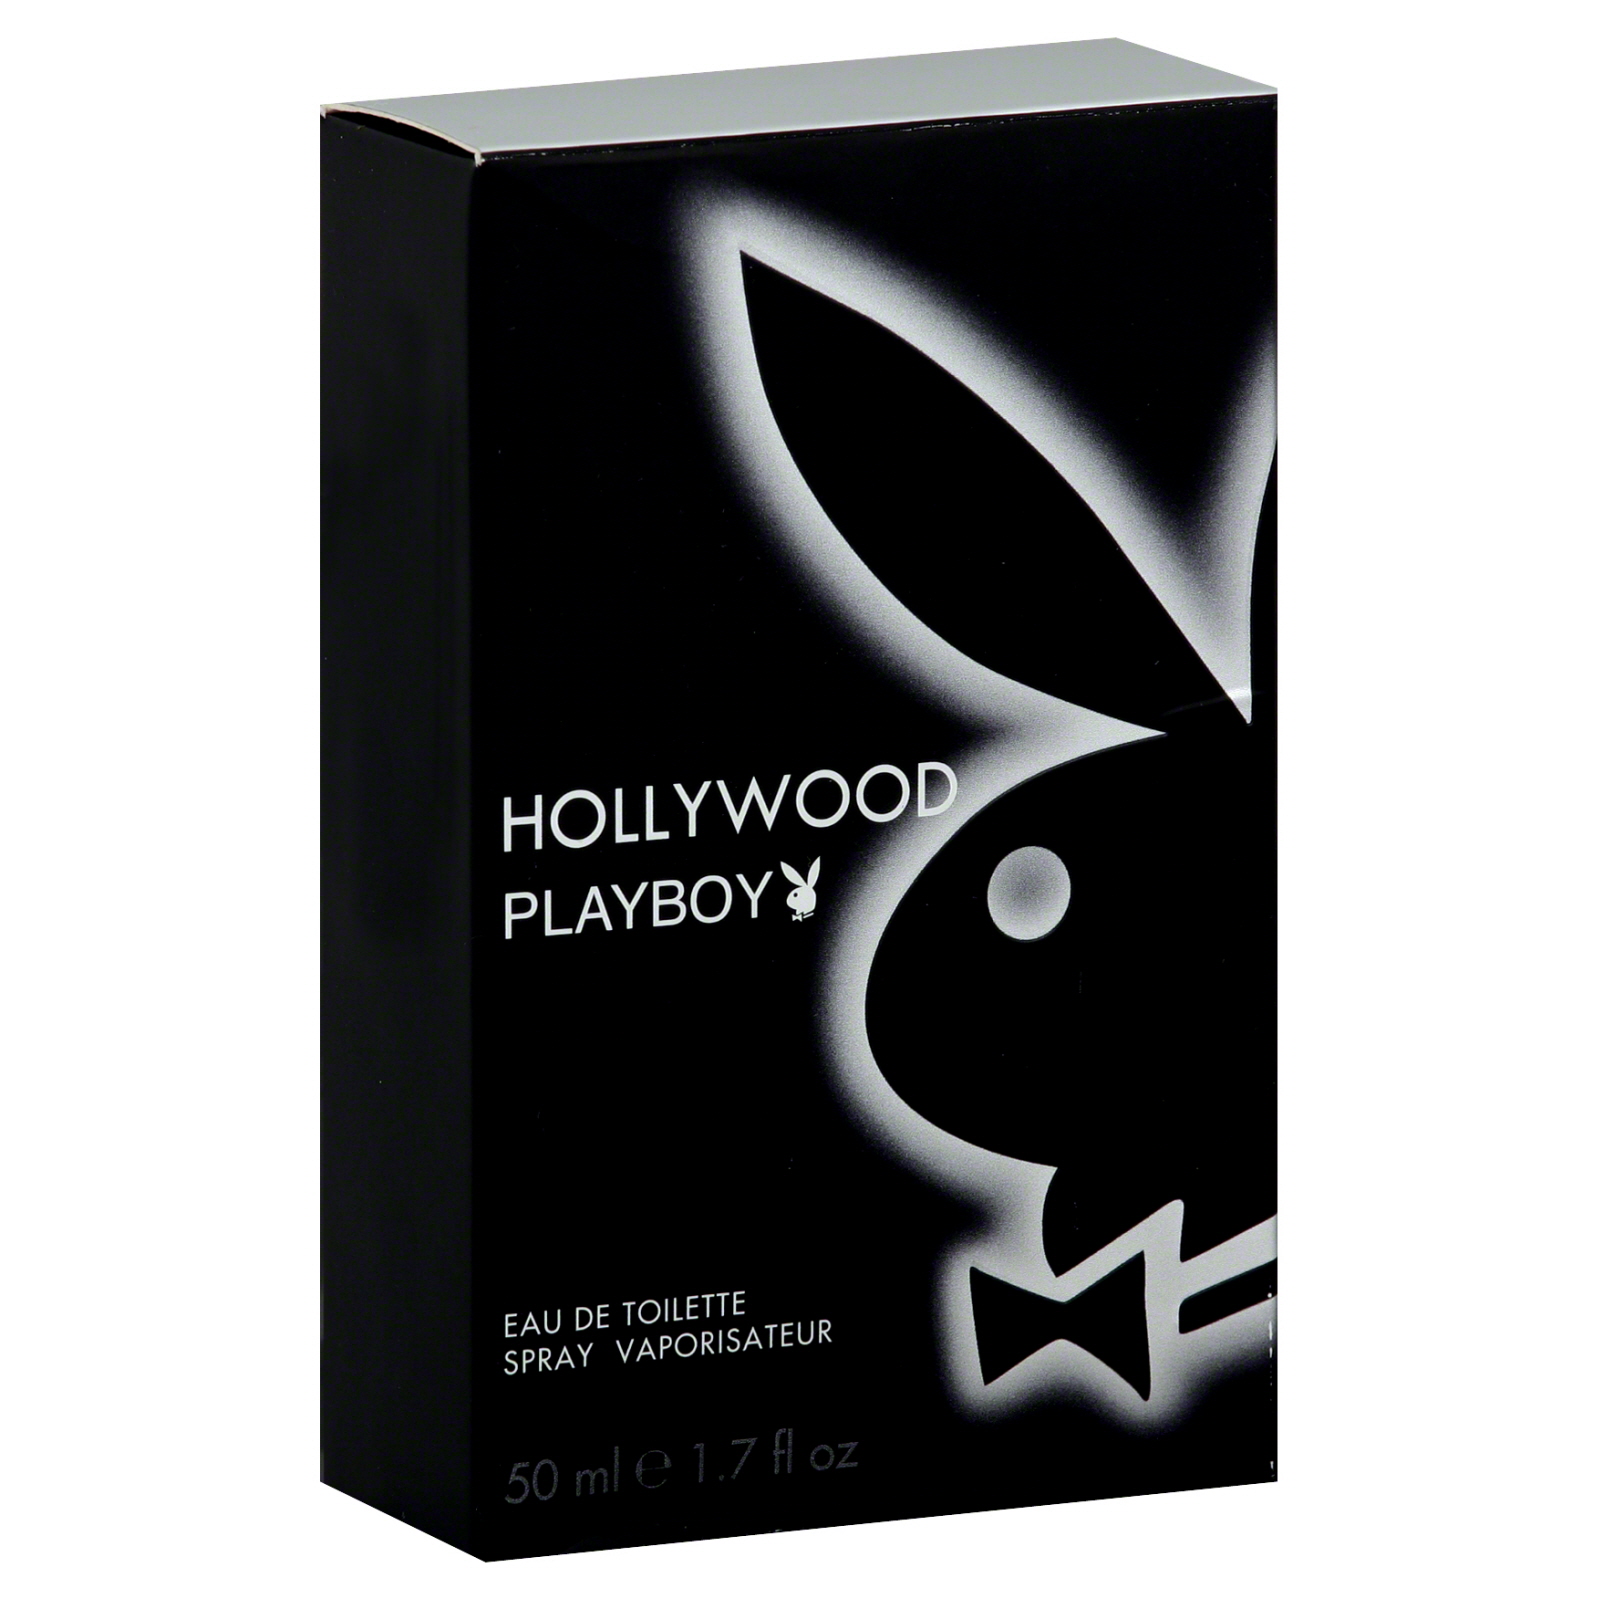 Playboy Hollywood 1.7 oz. Eau de Toilette